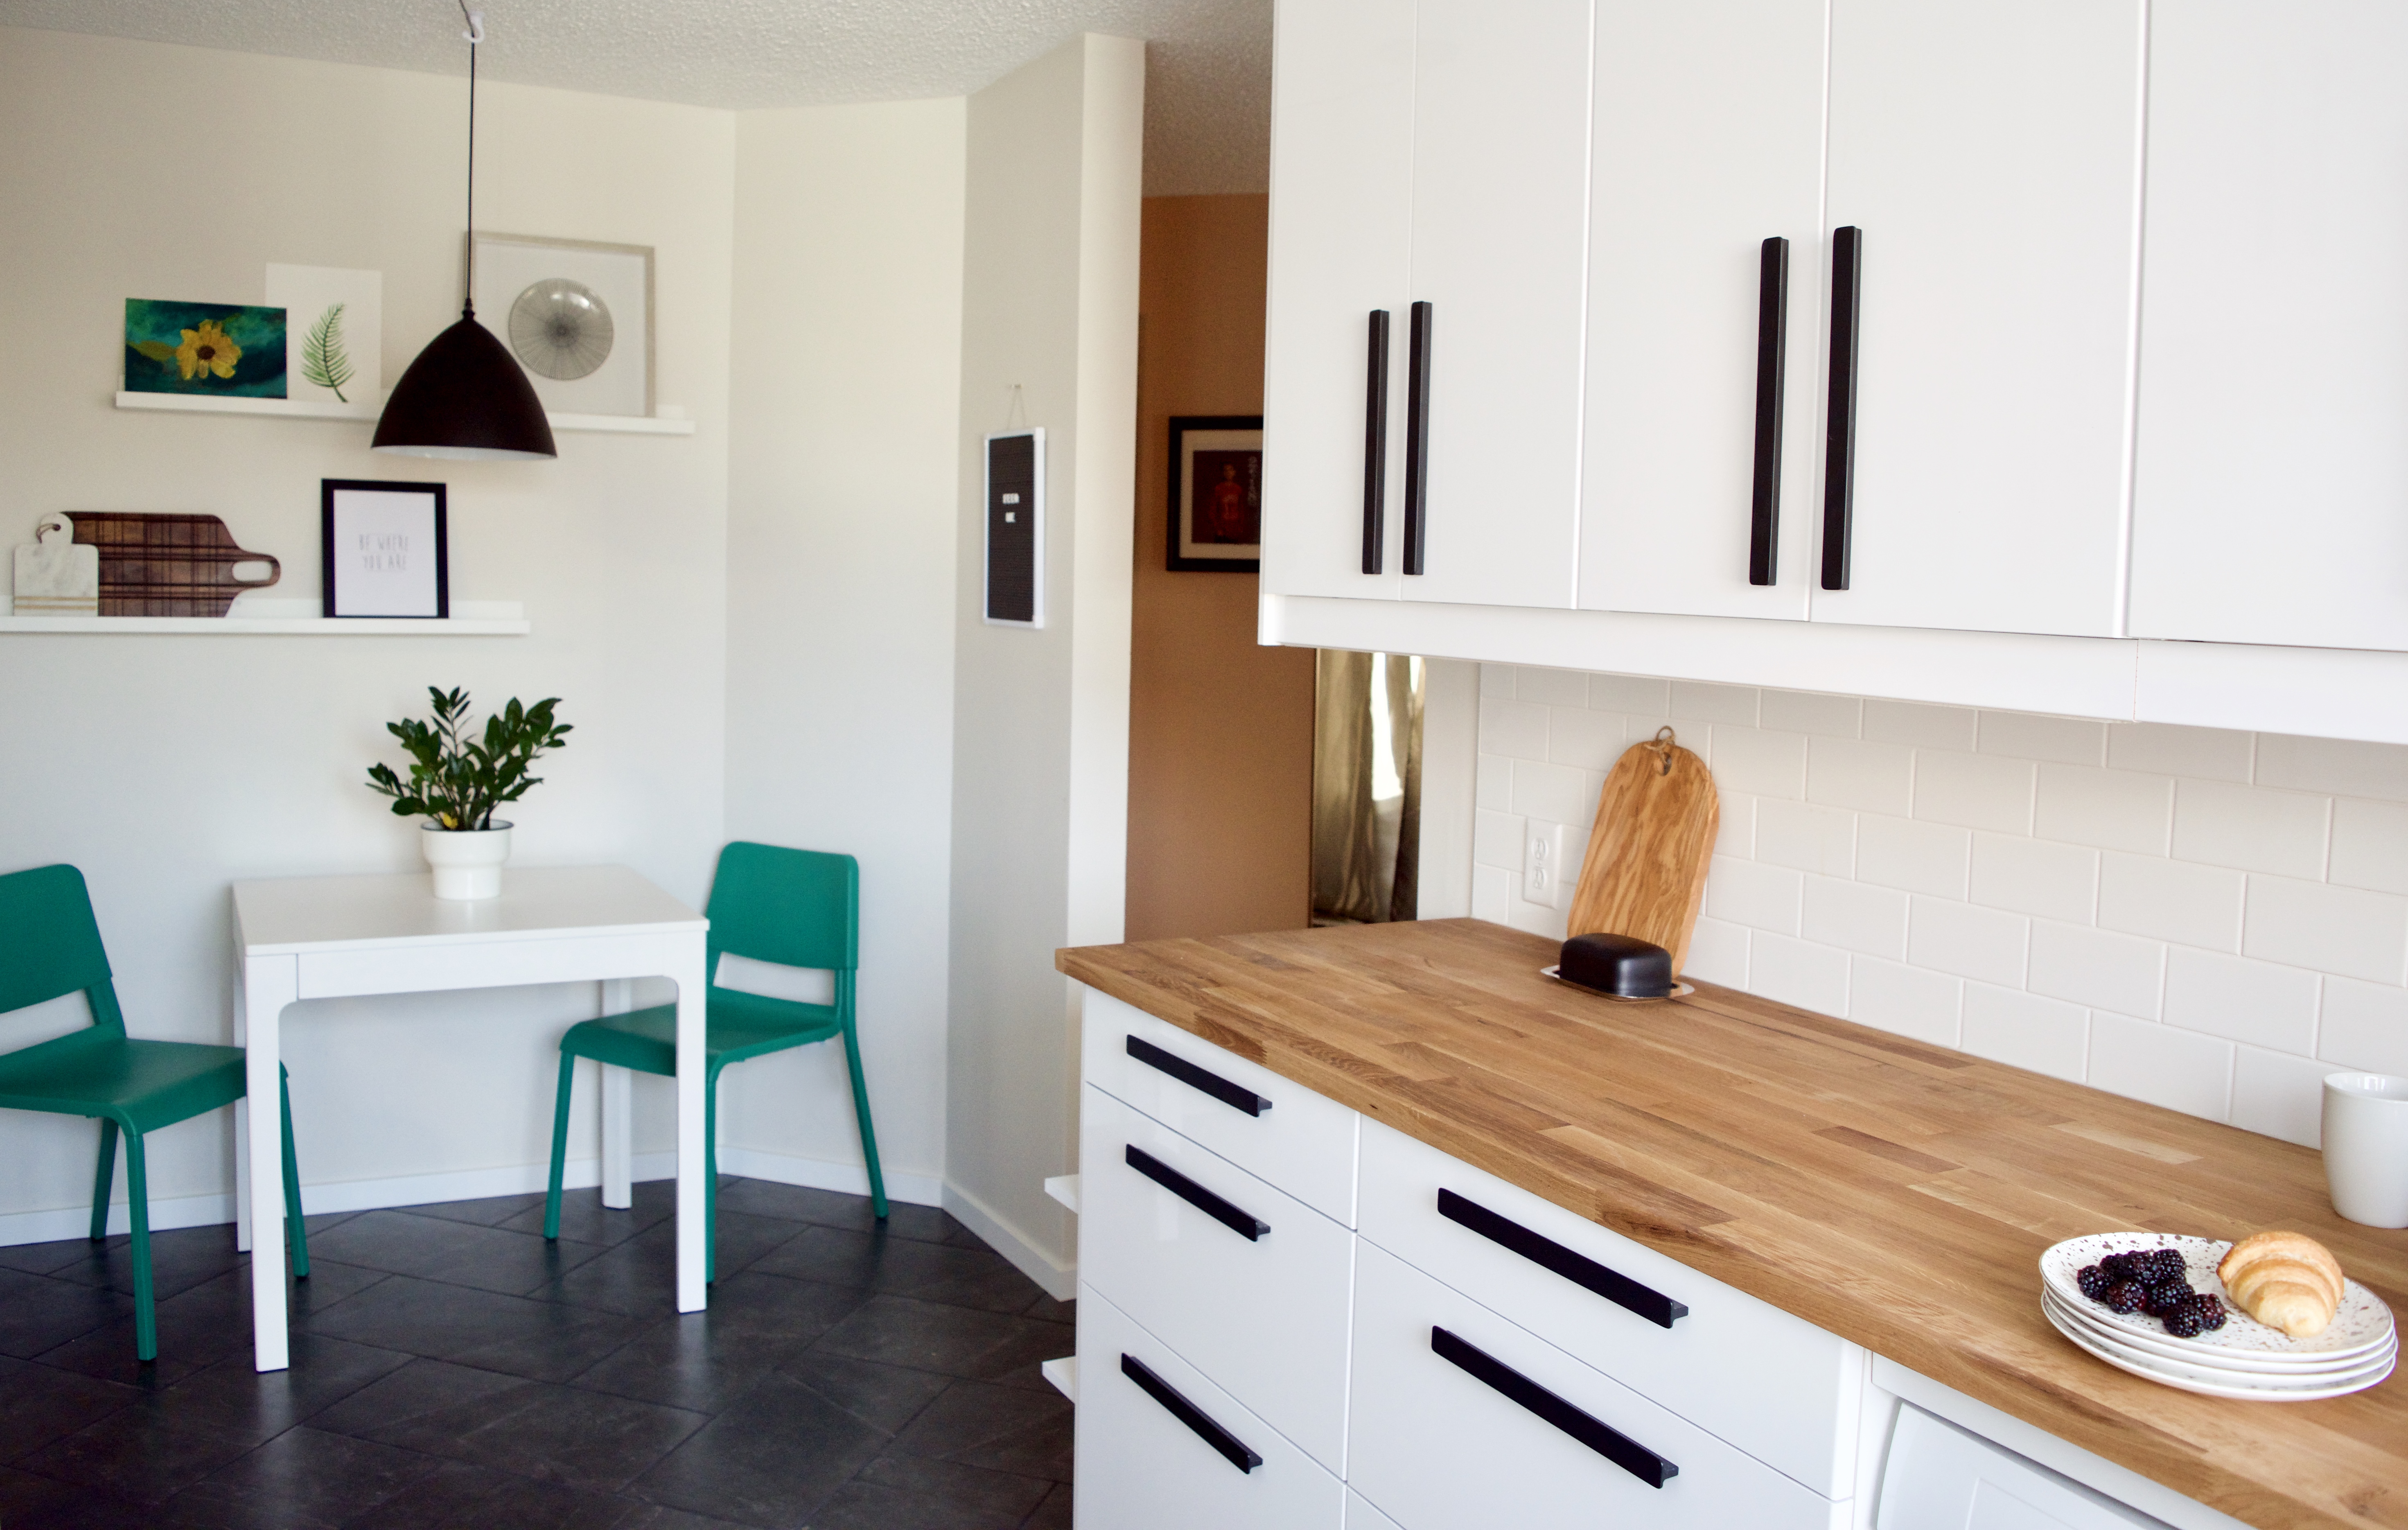 dining nook small kitchen modern farmhouse ikea white black butcher block green chairs table calgary designer